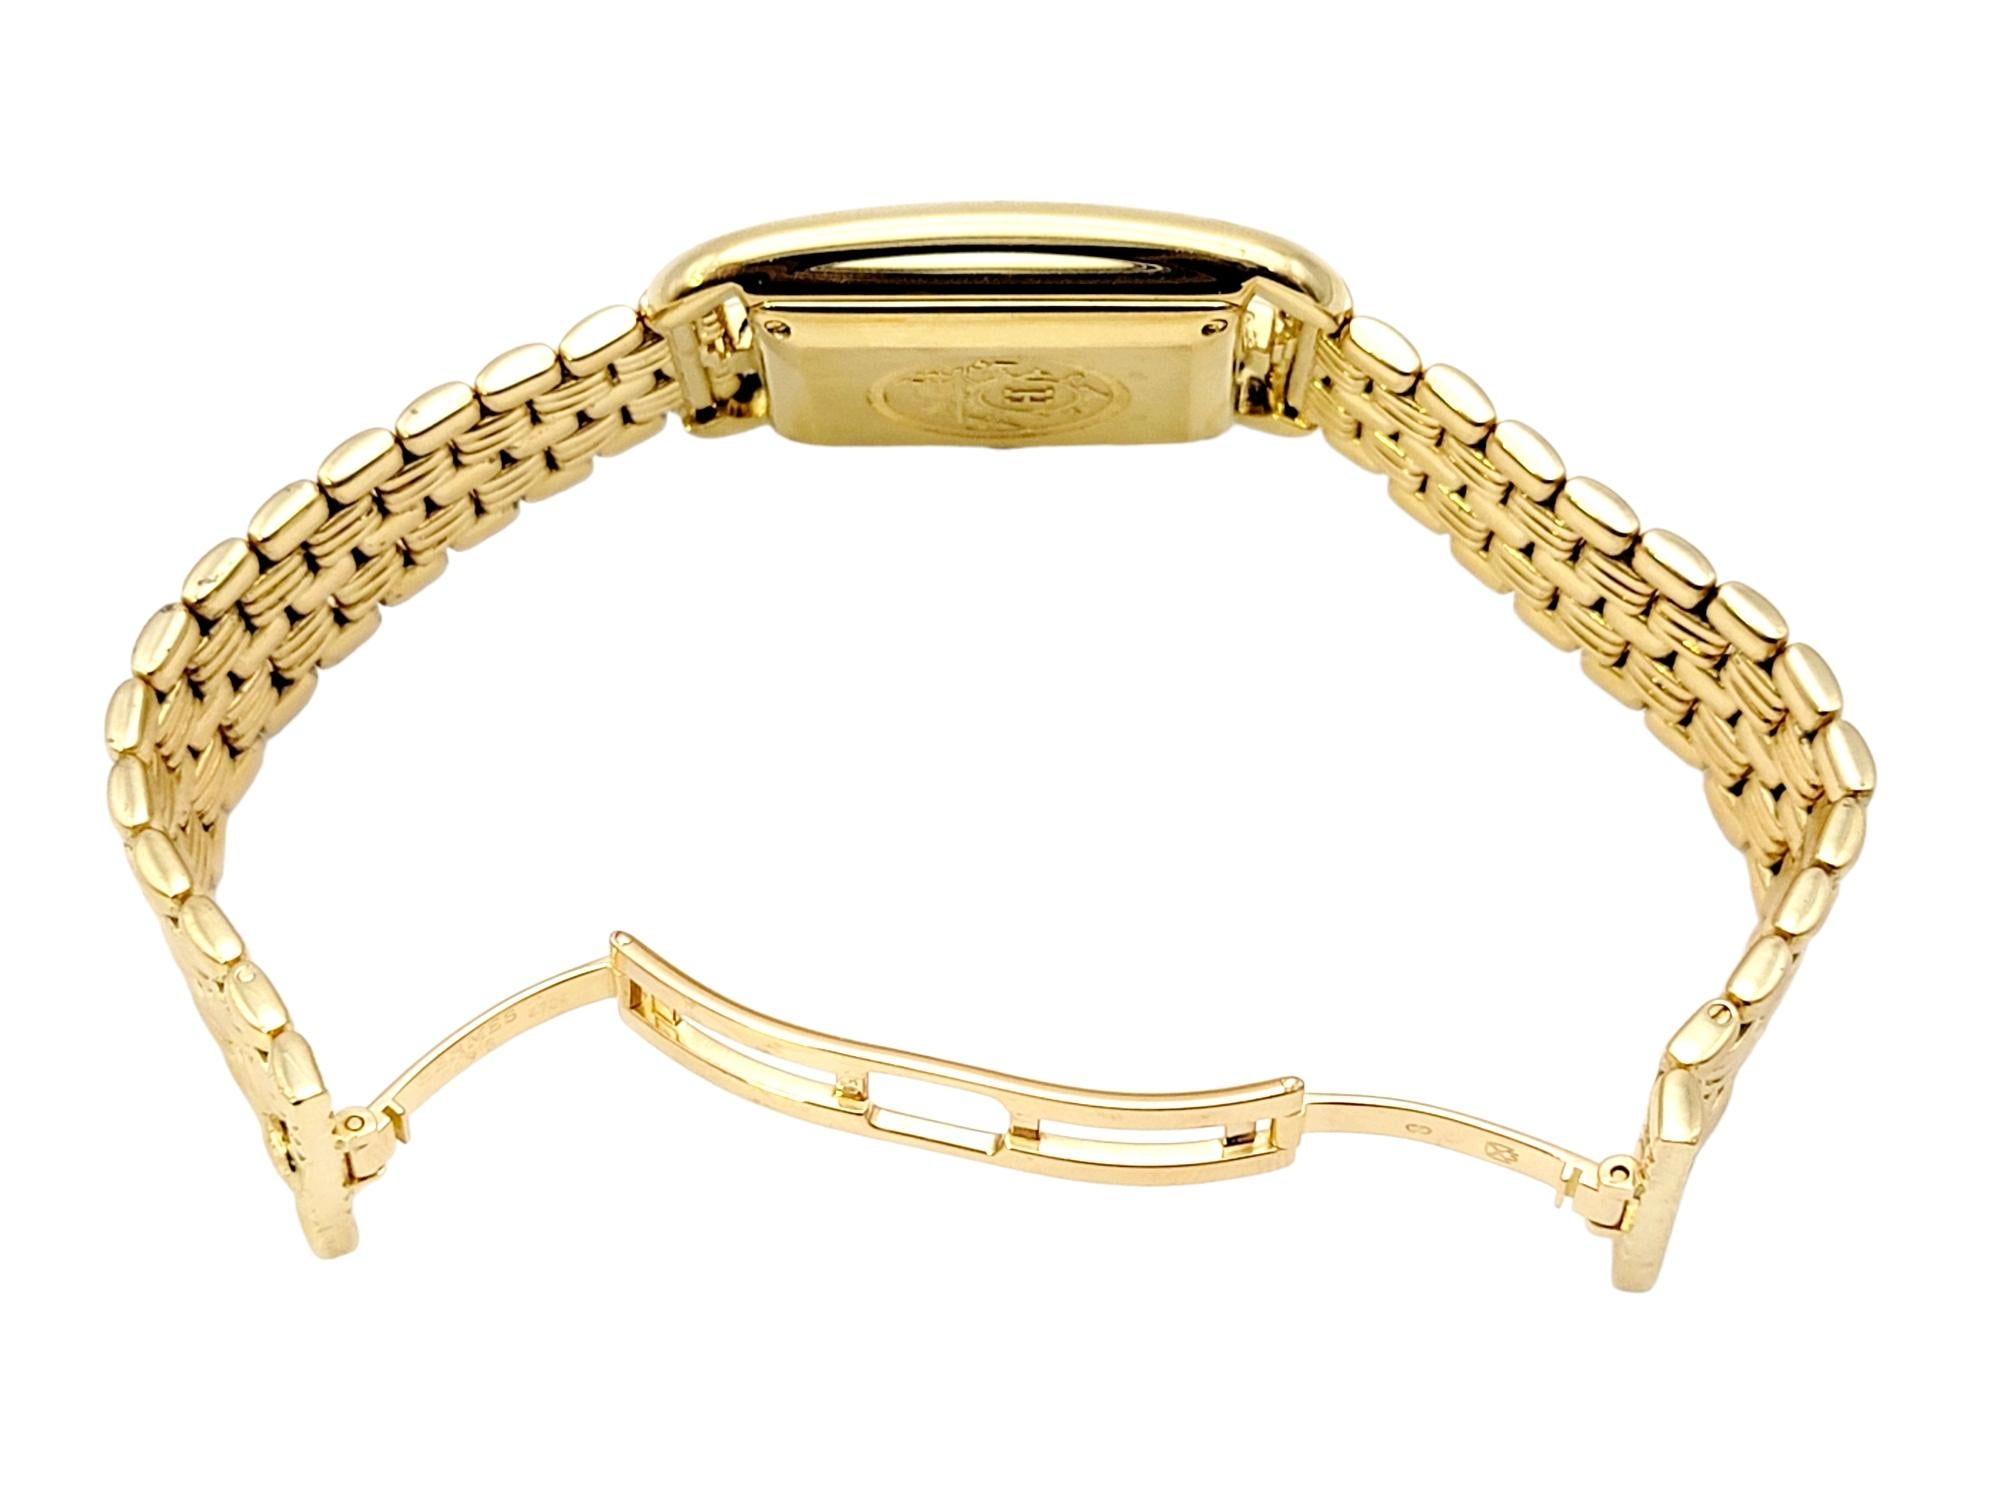 Hermes Cape Cod Automatic Wristwatch 18 Karat Yellow Gold 31 Mm Rectangular Case For Sale 1